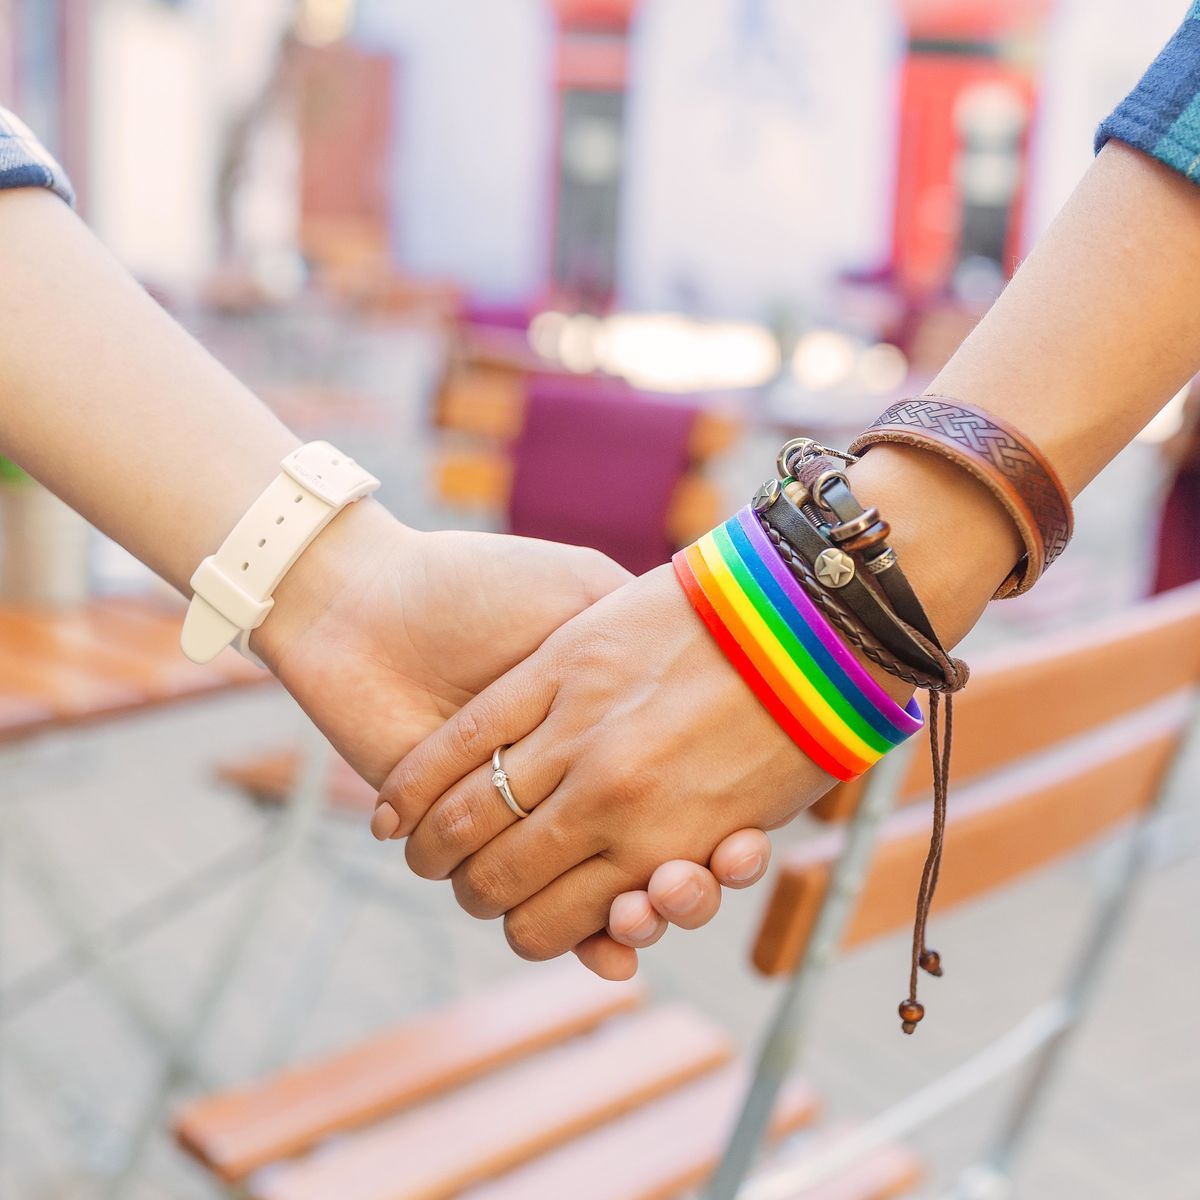 Two women hold hands - one wearing a Pride rainbow bracelet. 